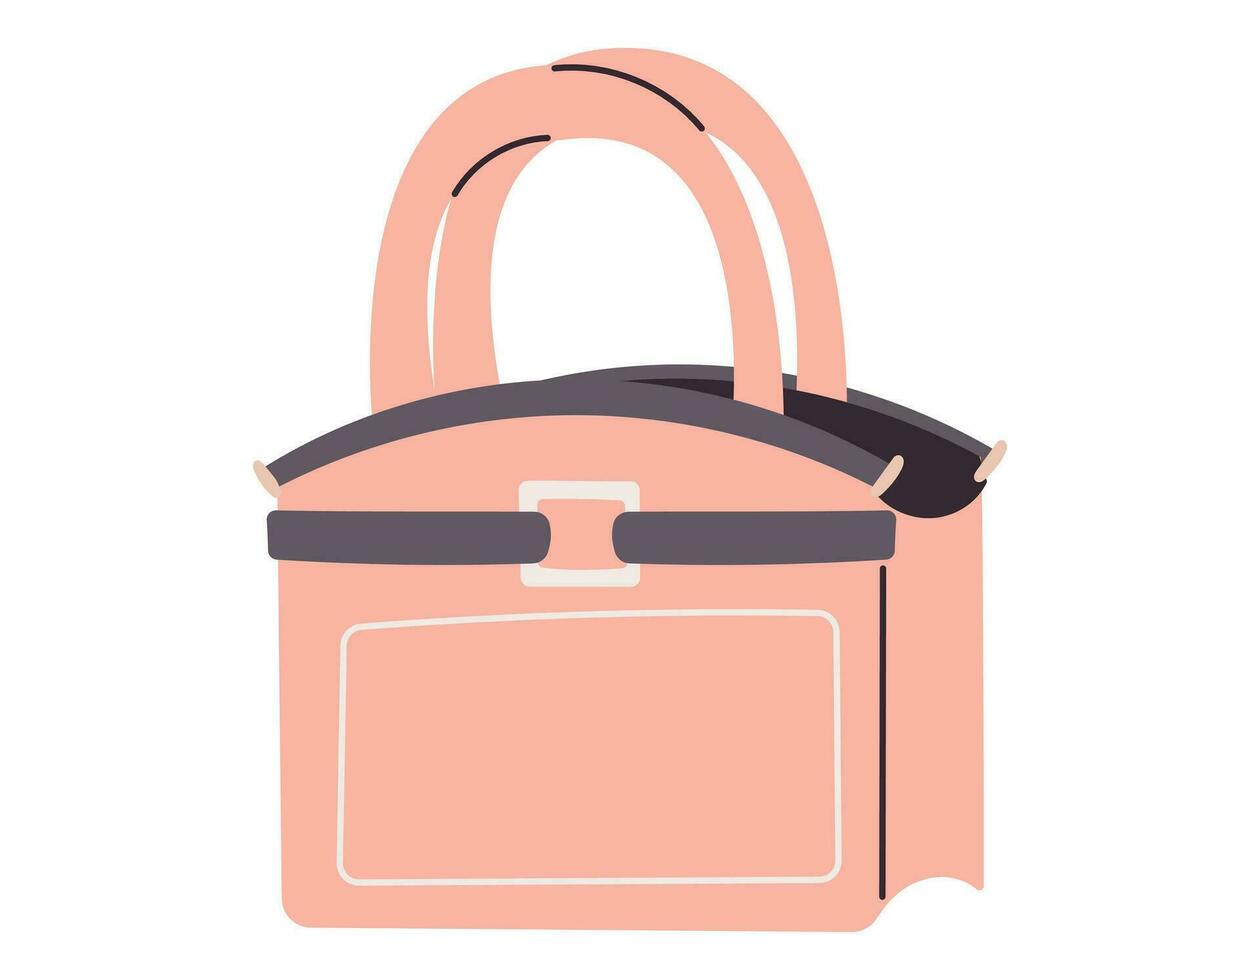 de moda mujer rosado elegante bolsa. vector plano aislado accesorio bolso.